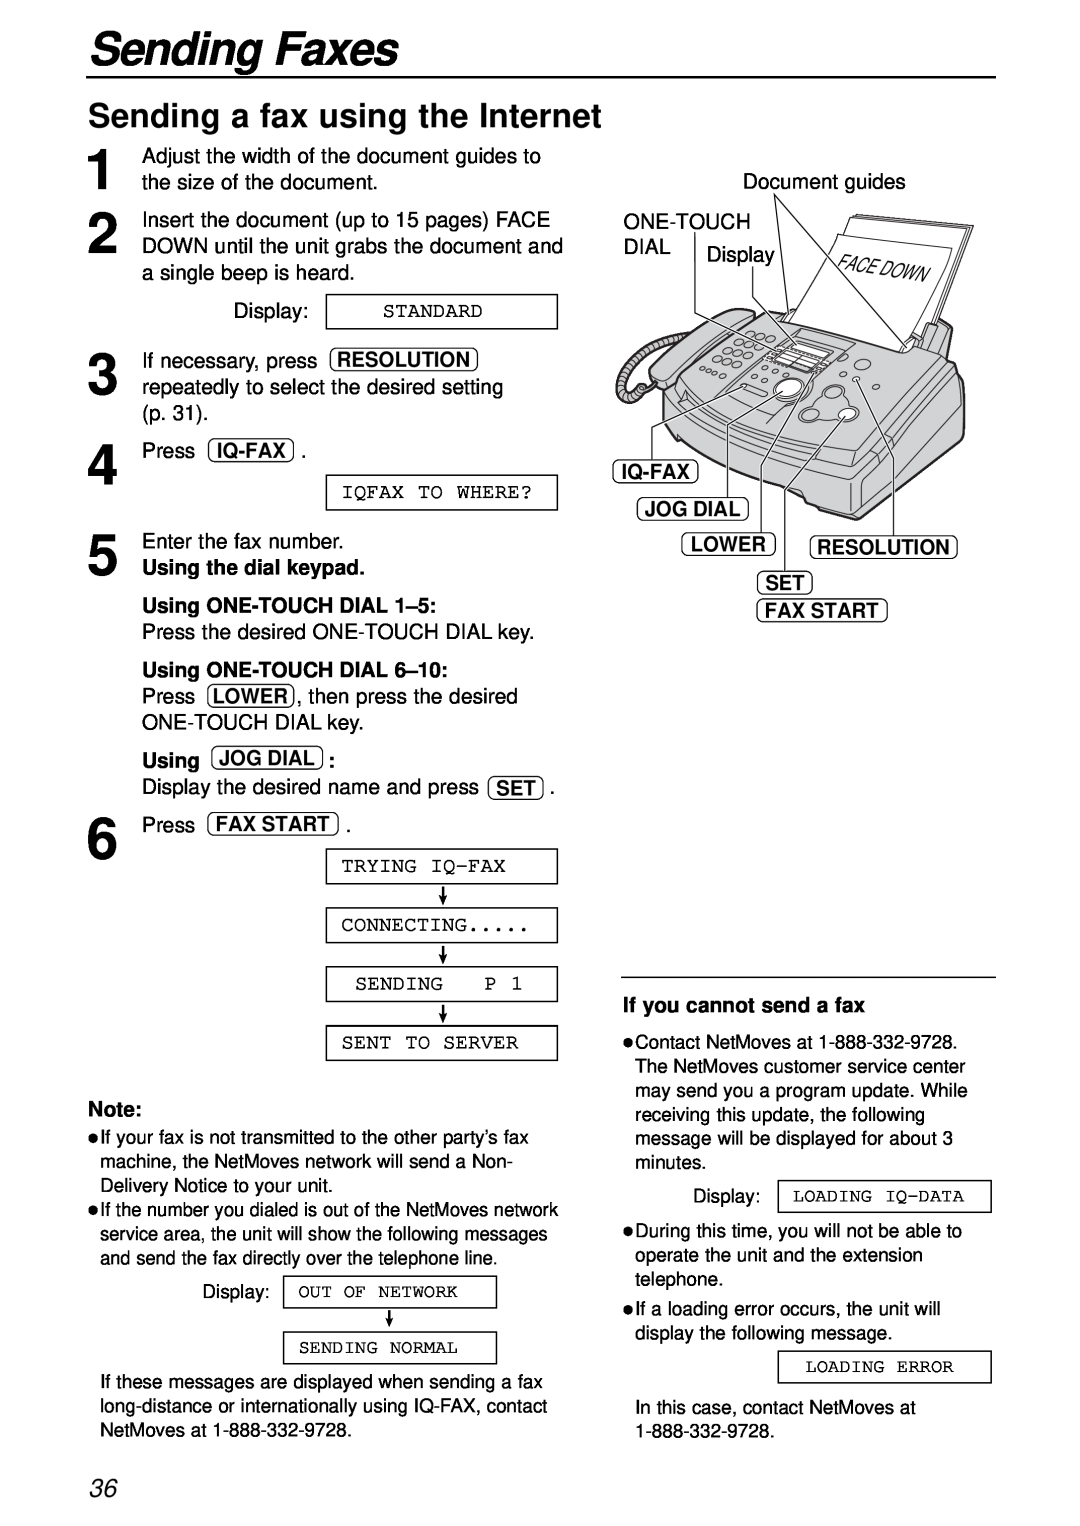 Panasonic KX-FL501 Sending a fax using the Internet, Sending Faxes, Resolution, Iq-Fax, Using the dial keypad, Jog Dial 